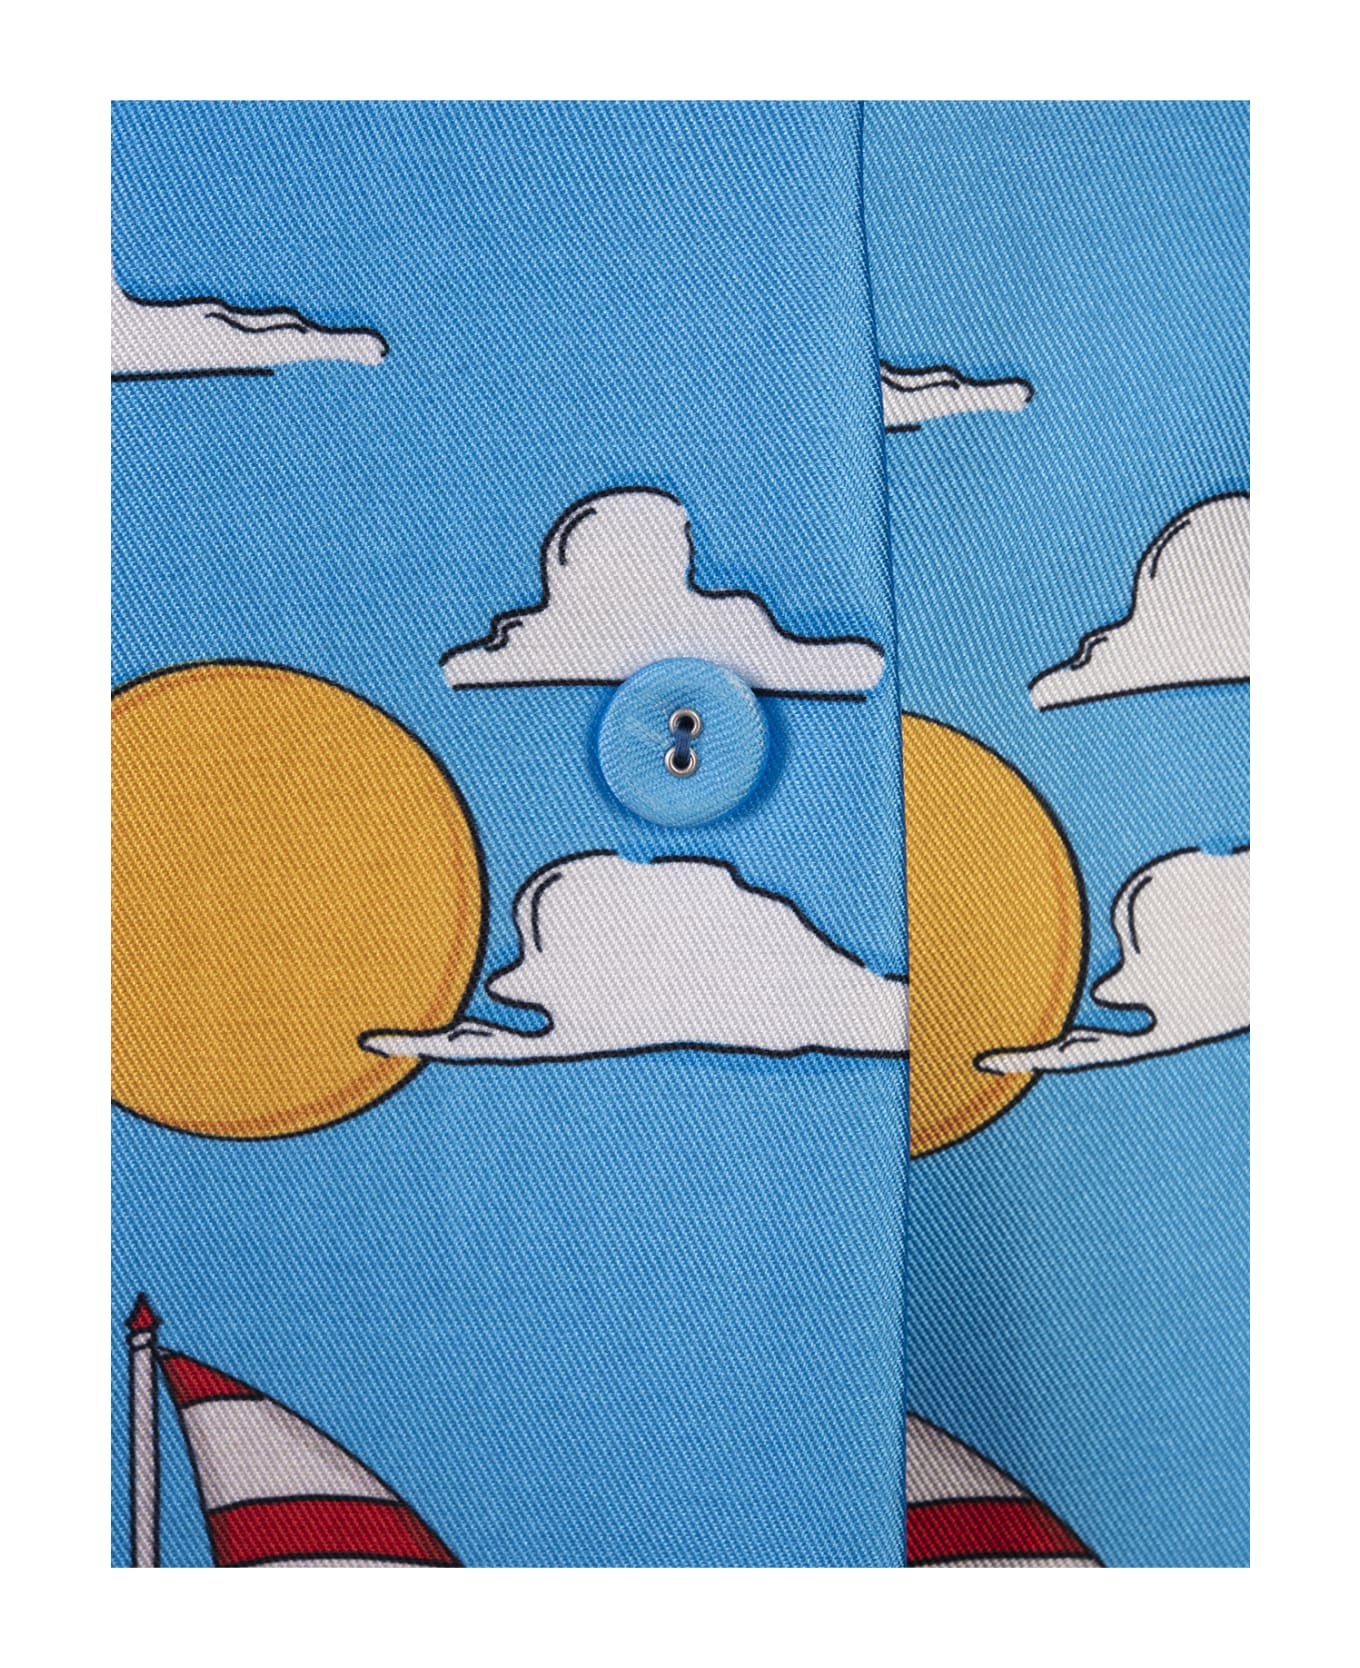 Alessandro Enriquez Short Skirt With Marzameni Print - Blue スカート